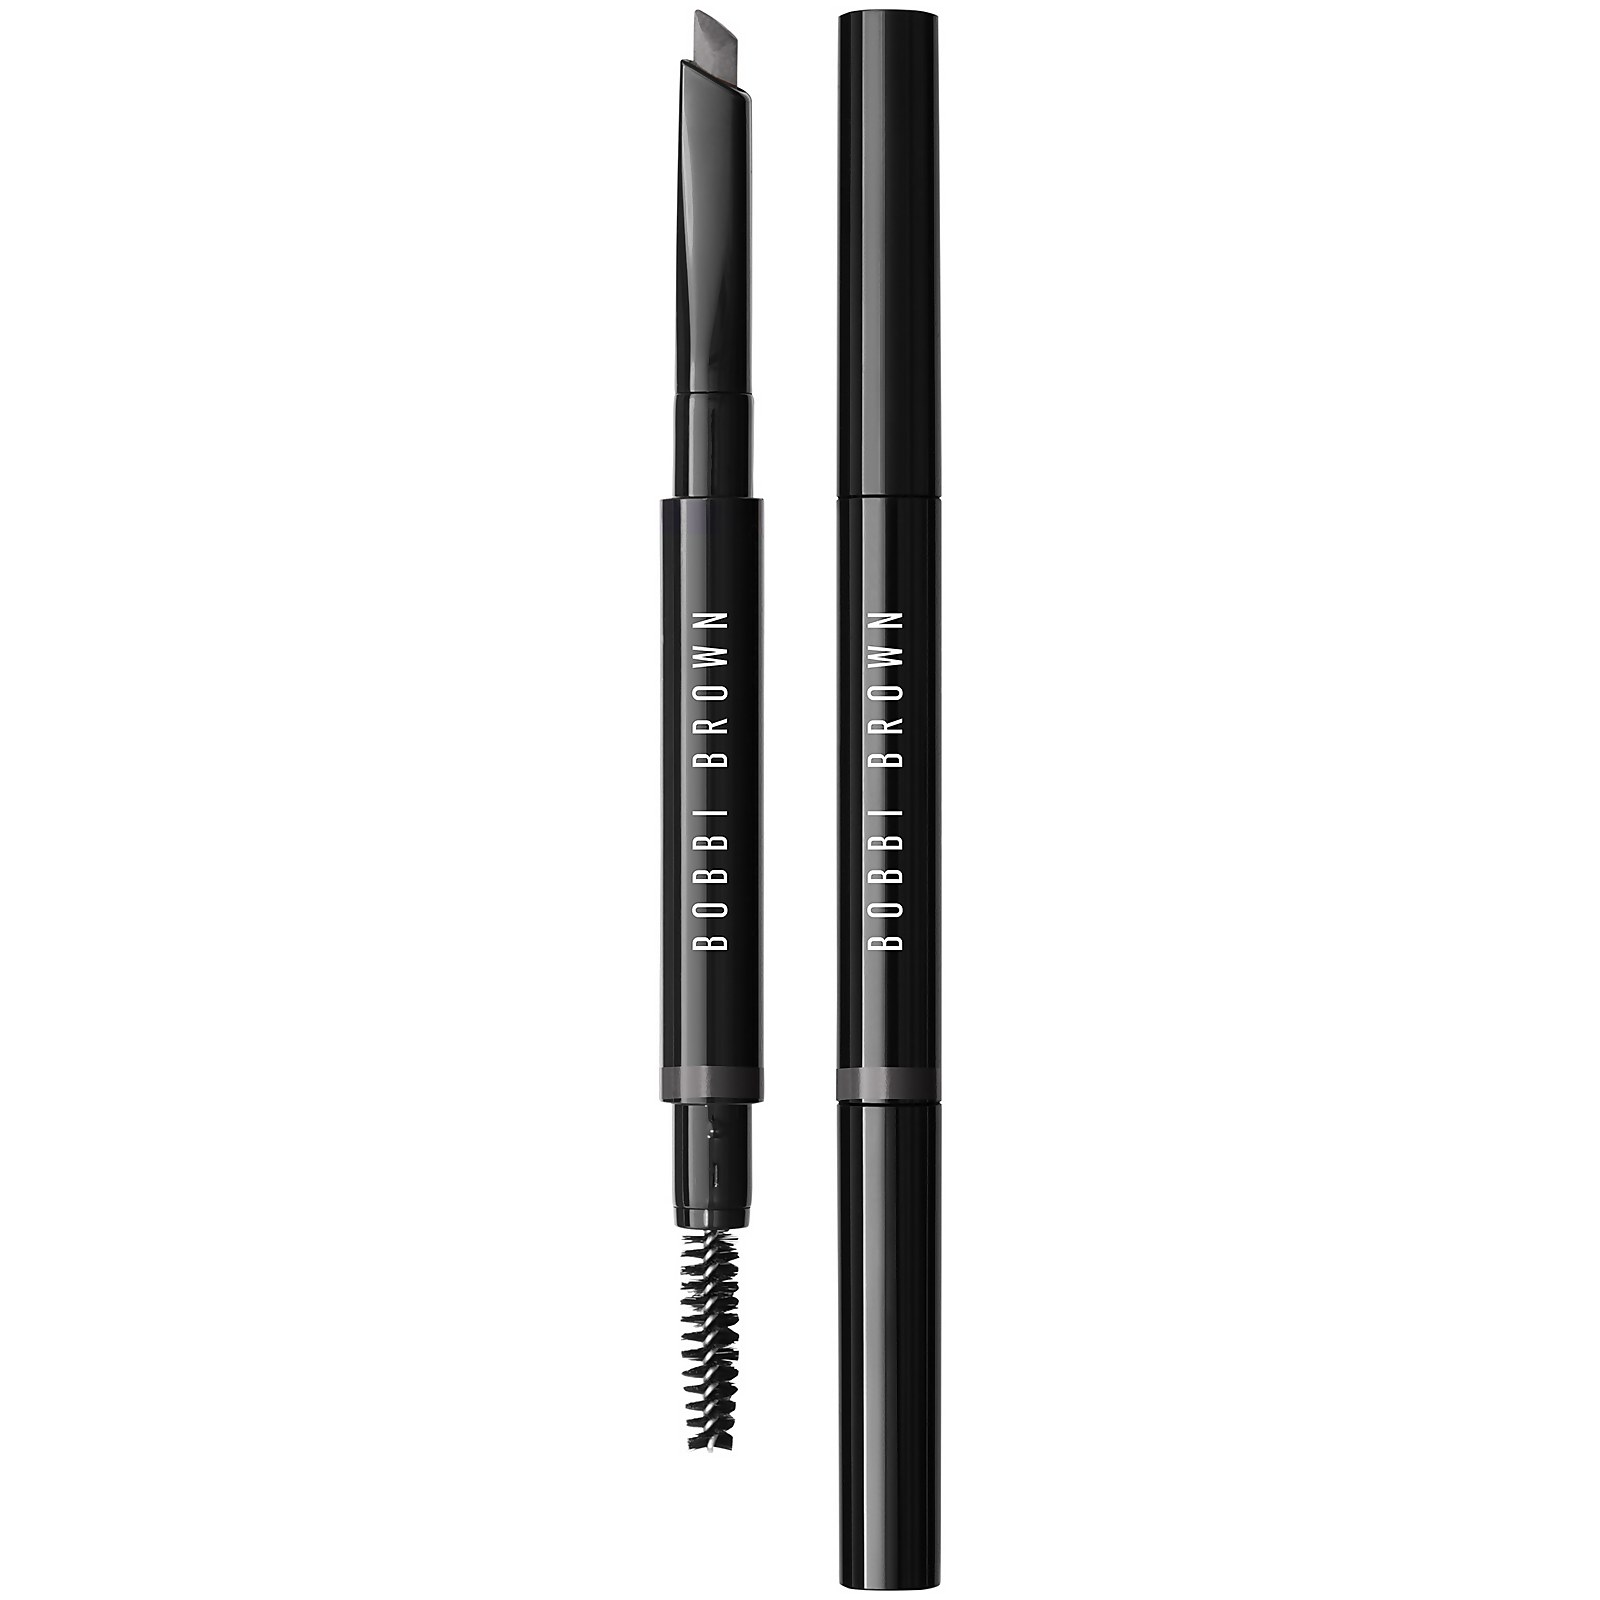 Bobbi Brown Long-Wear Brow Pencil 1.15g (Various Shades) - Soft Black